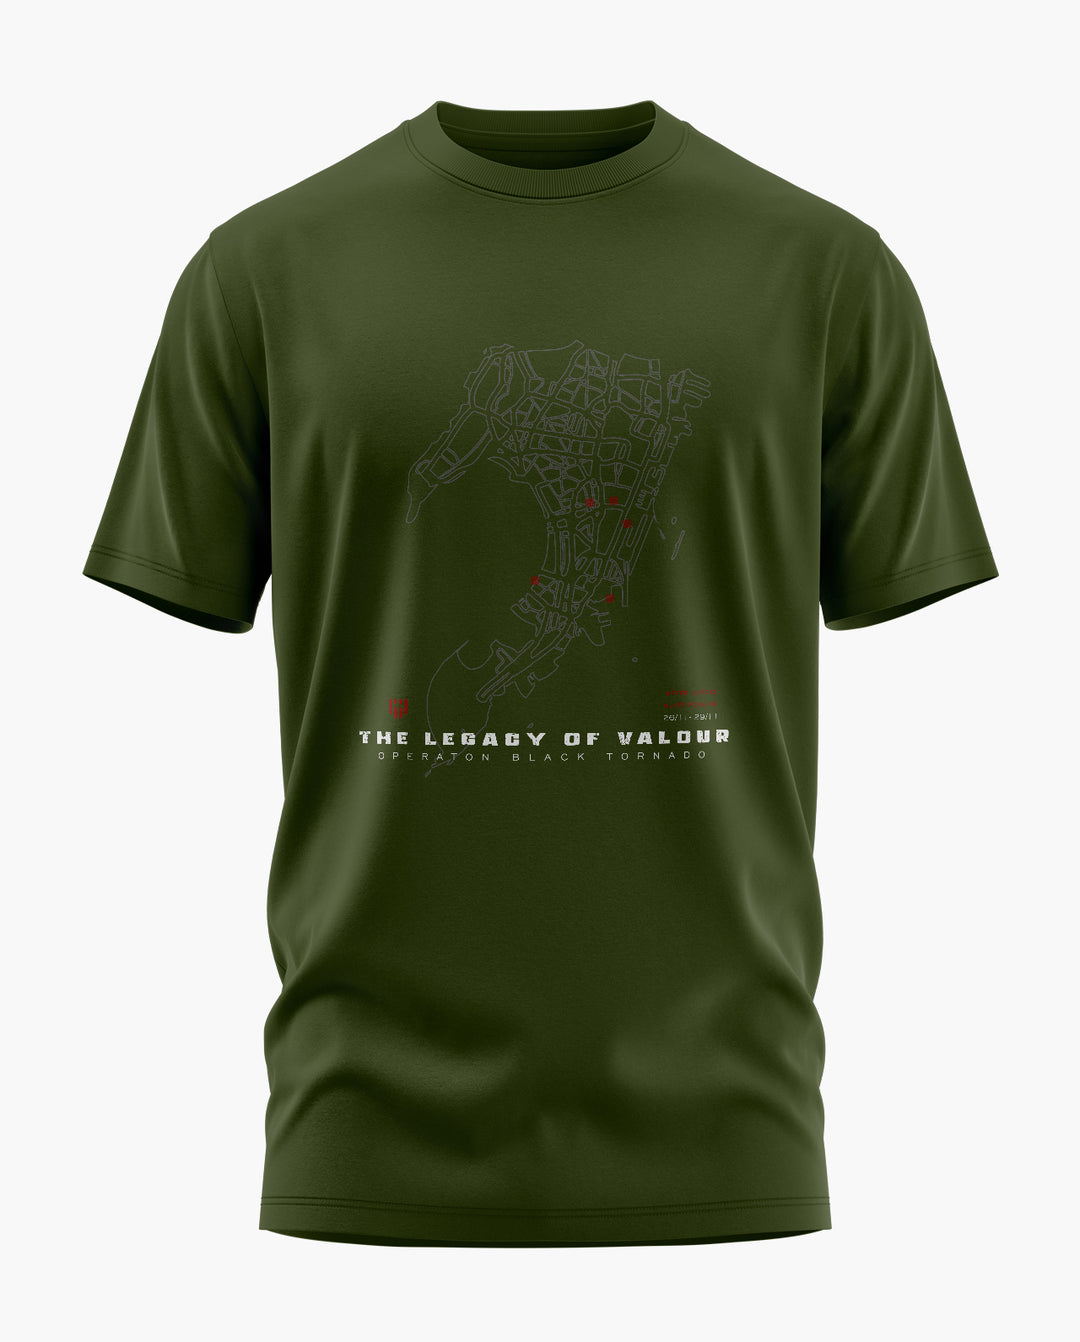 The Legacy of Valour SE T-Shirt